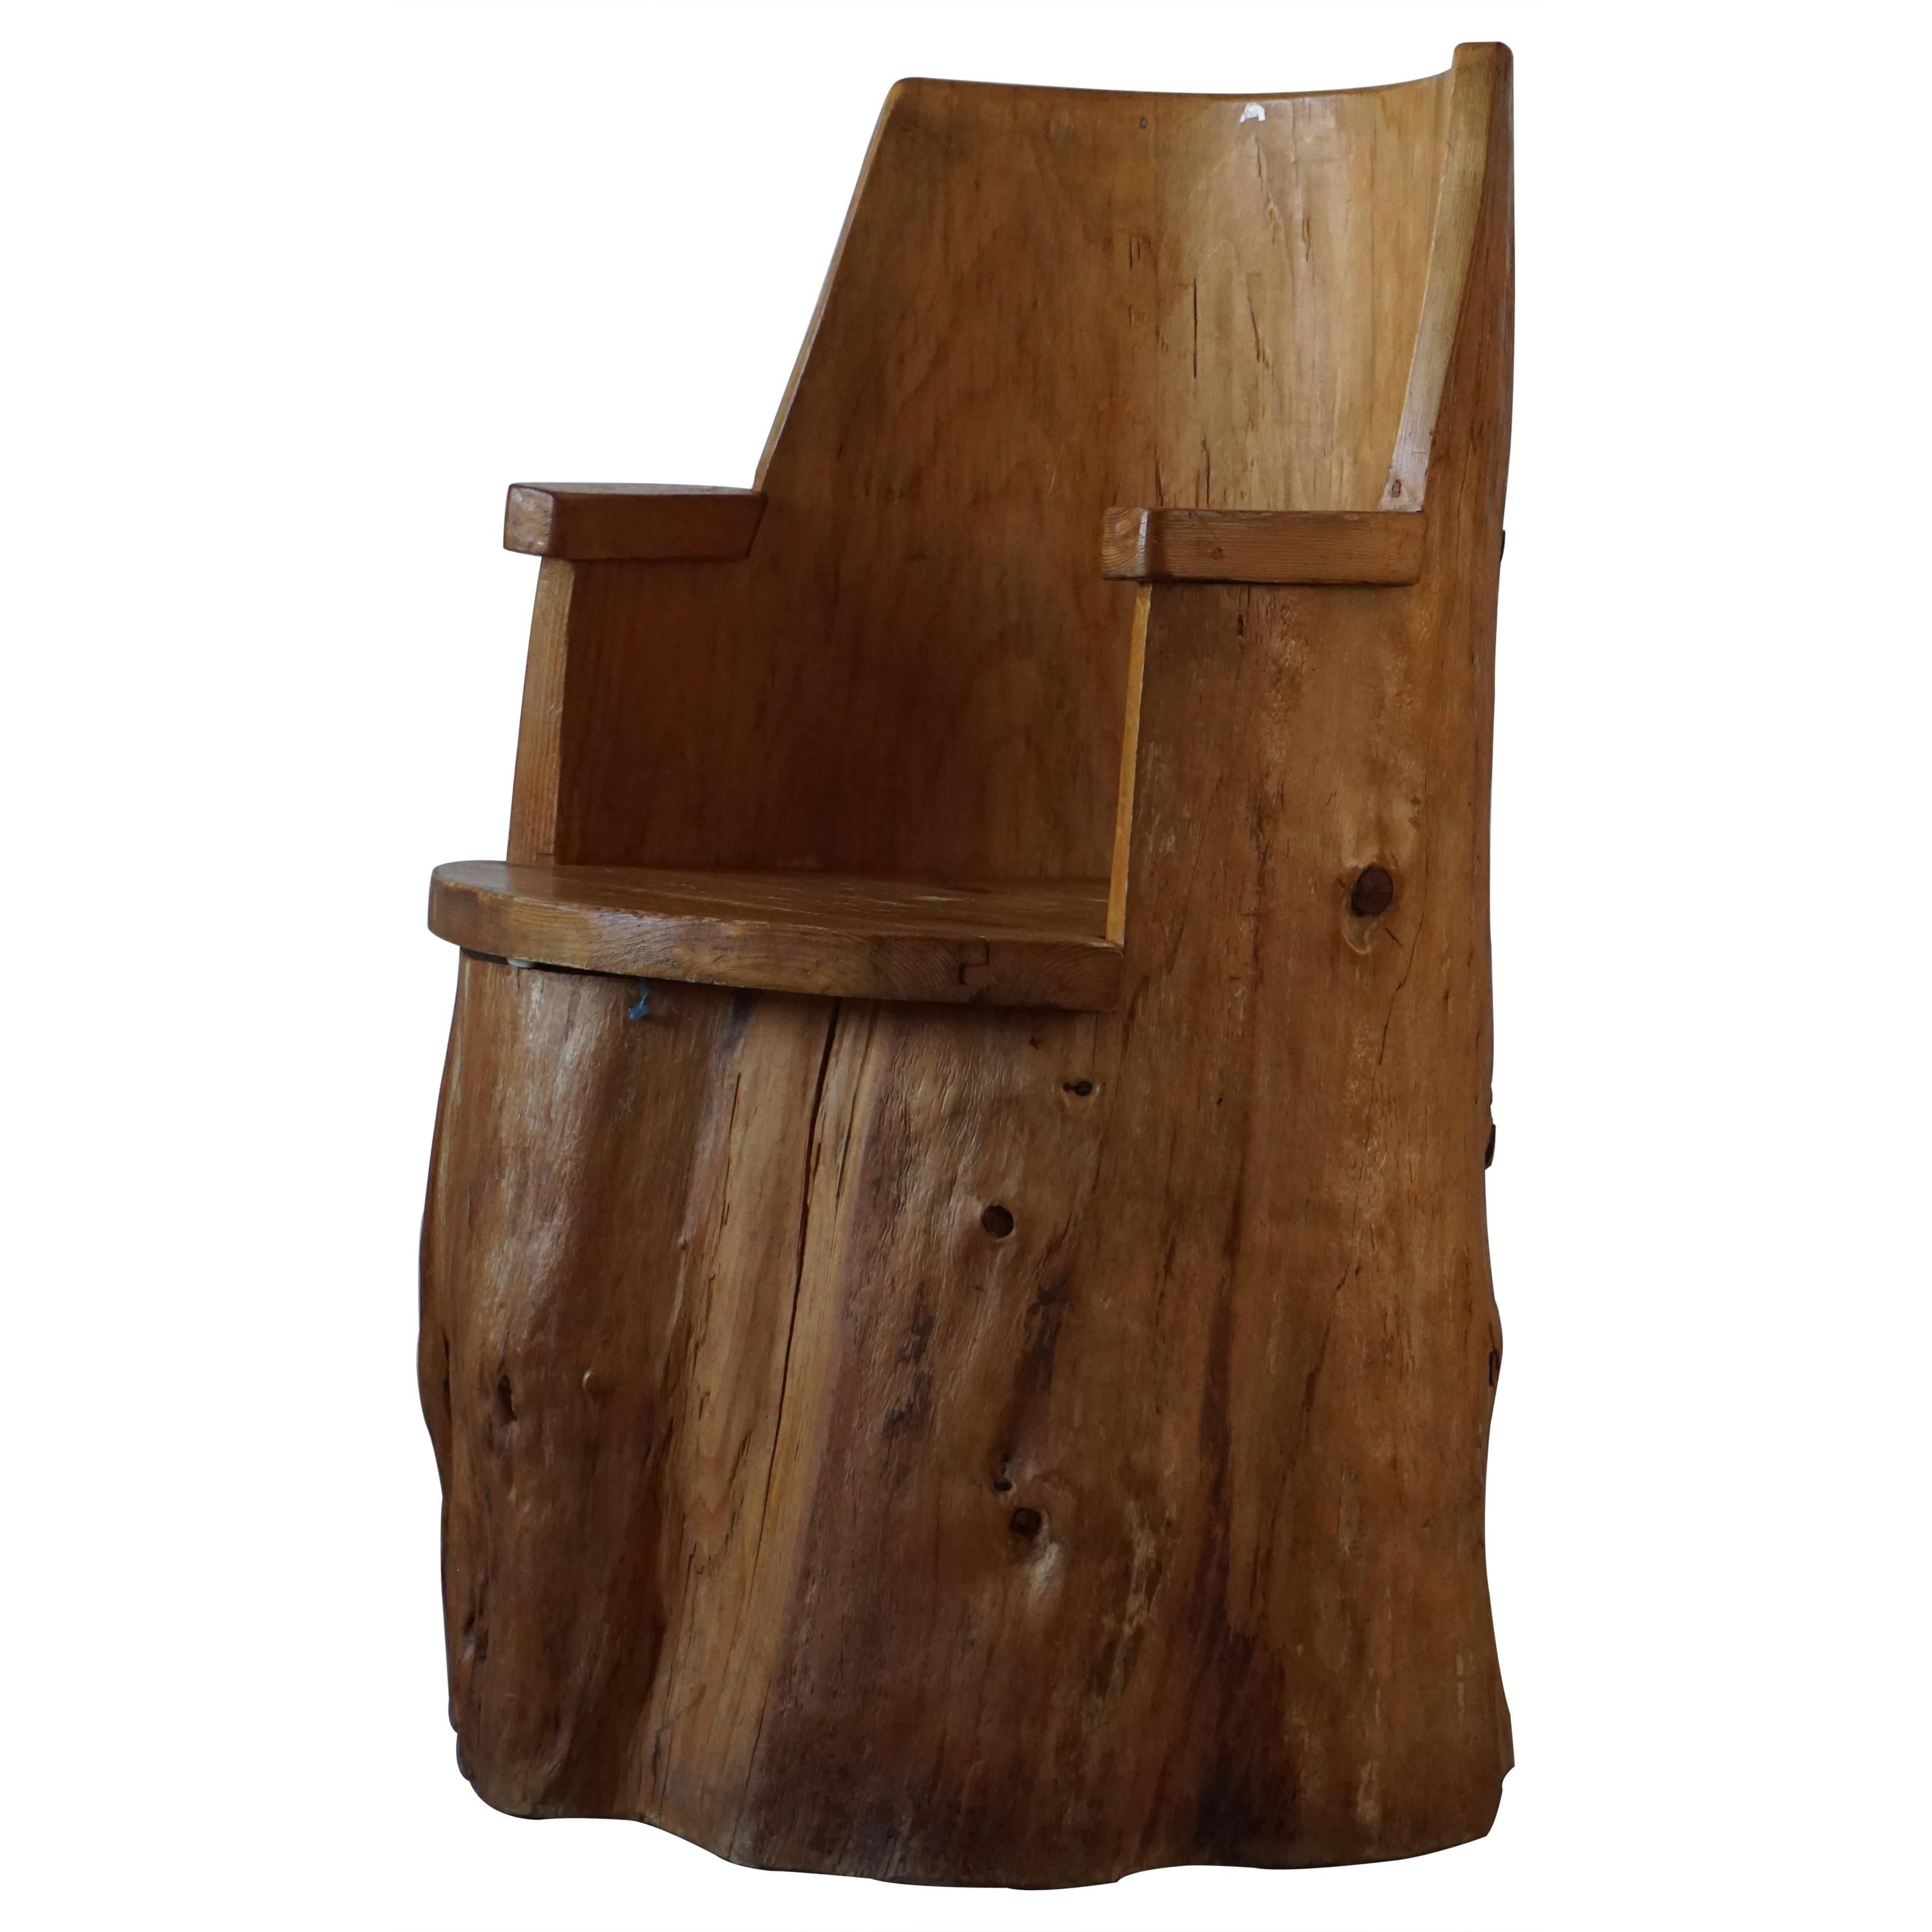 Mid-Century Swedish Stump Pine Chair, Dated 1975